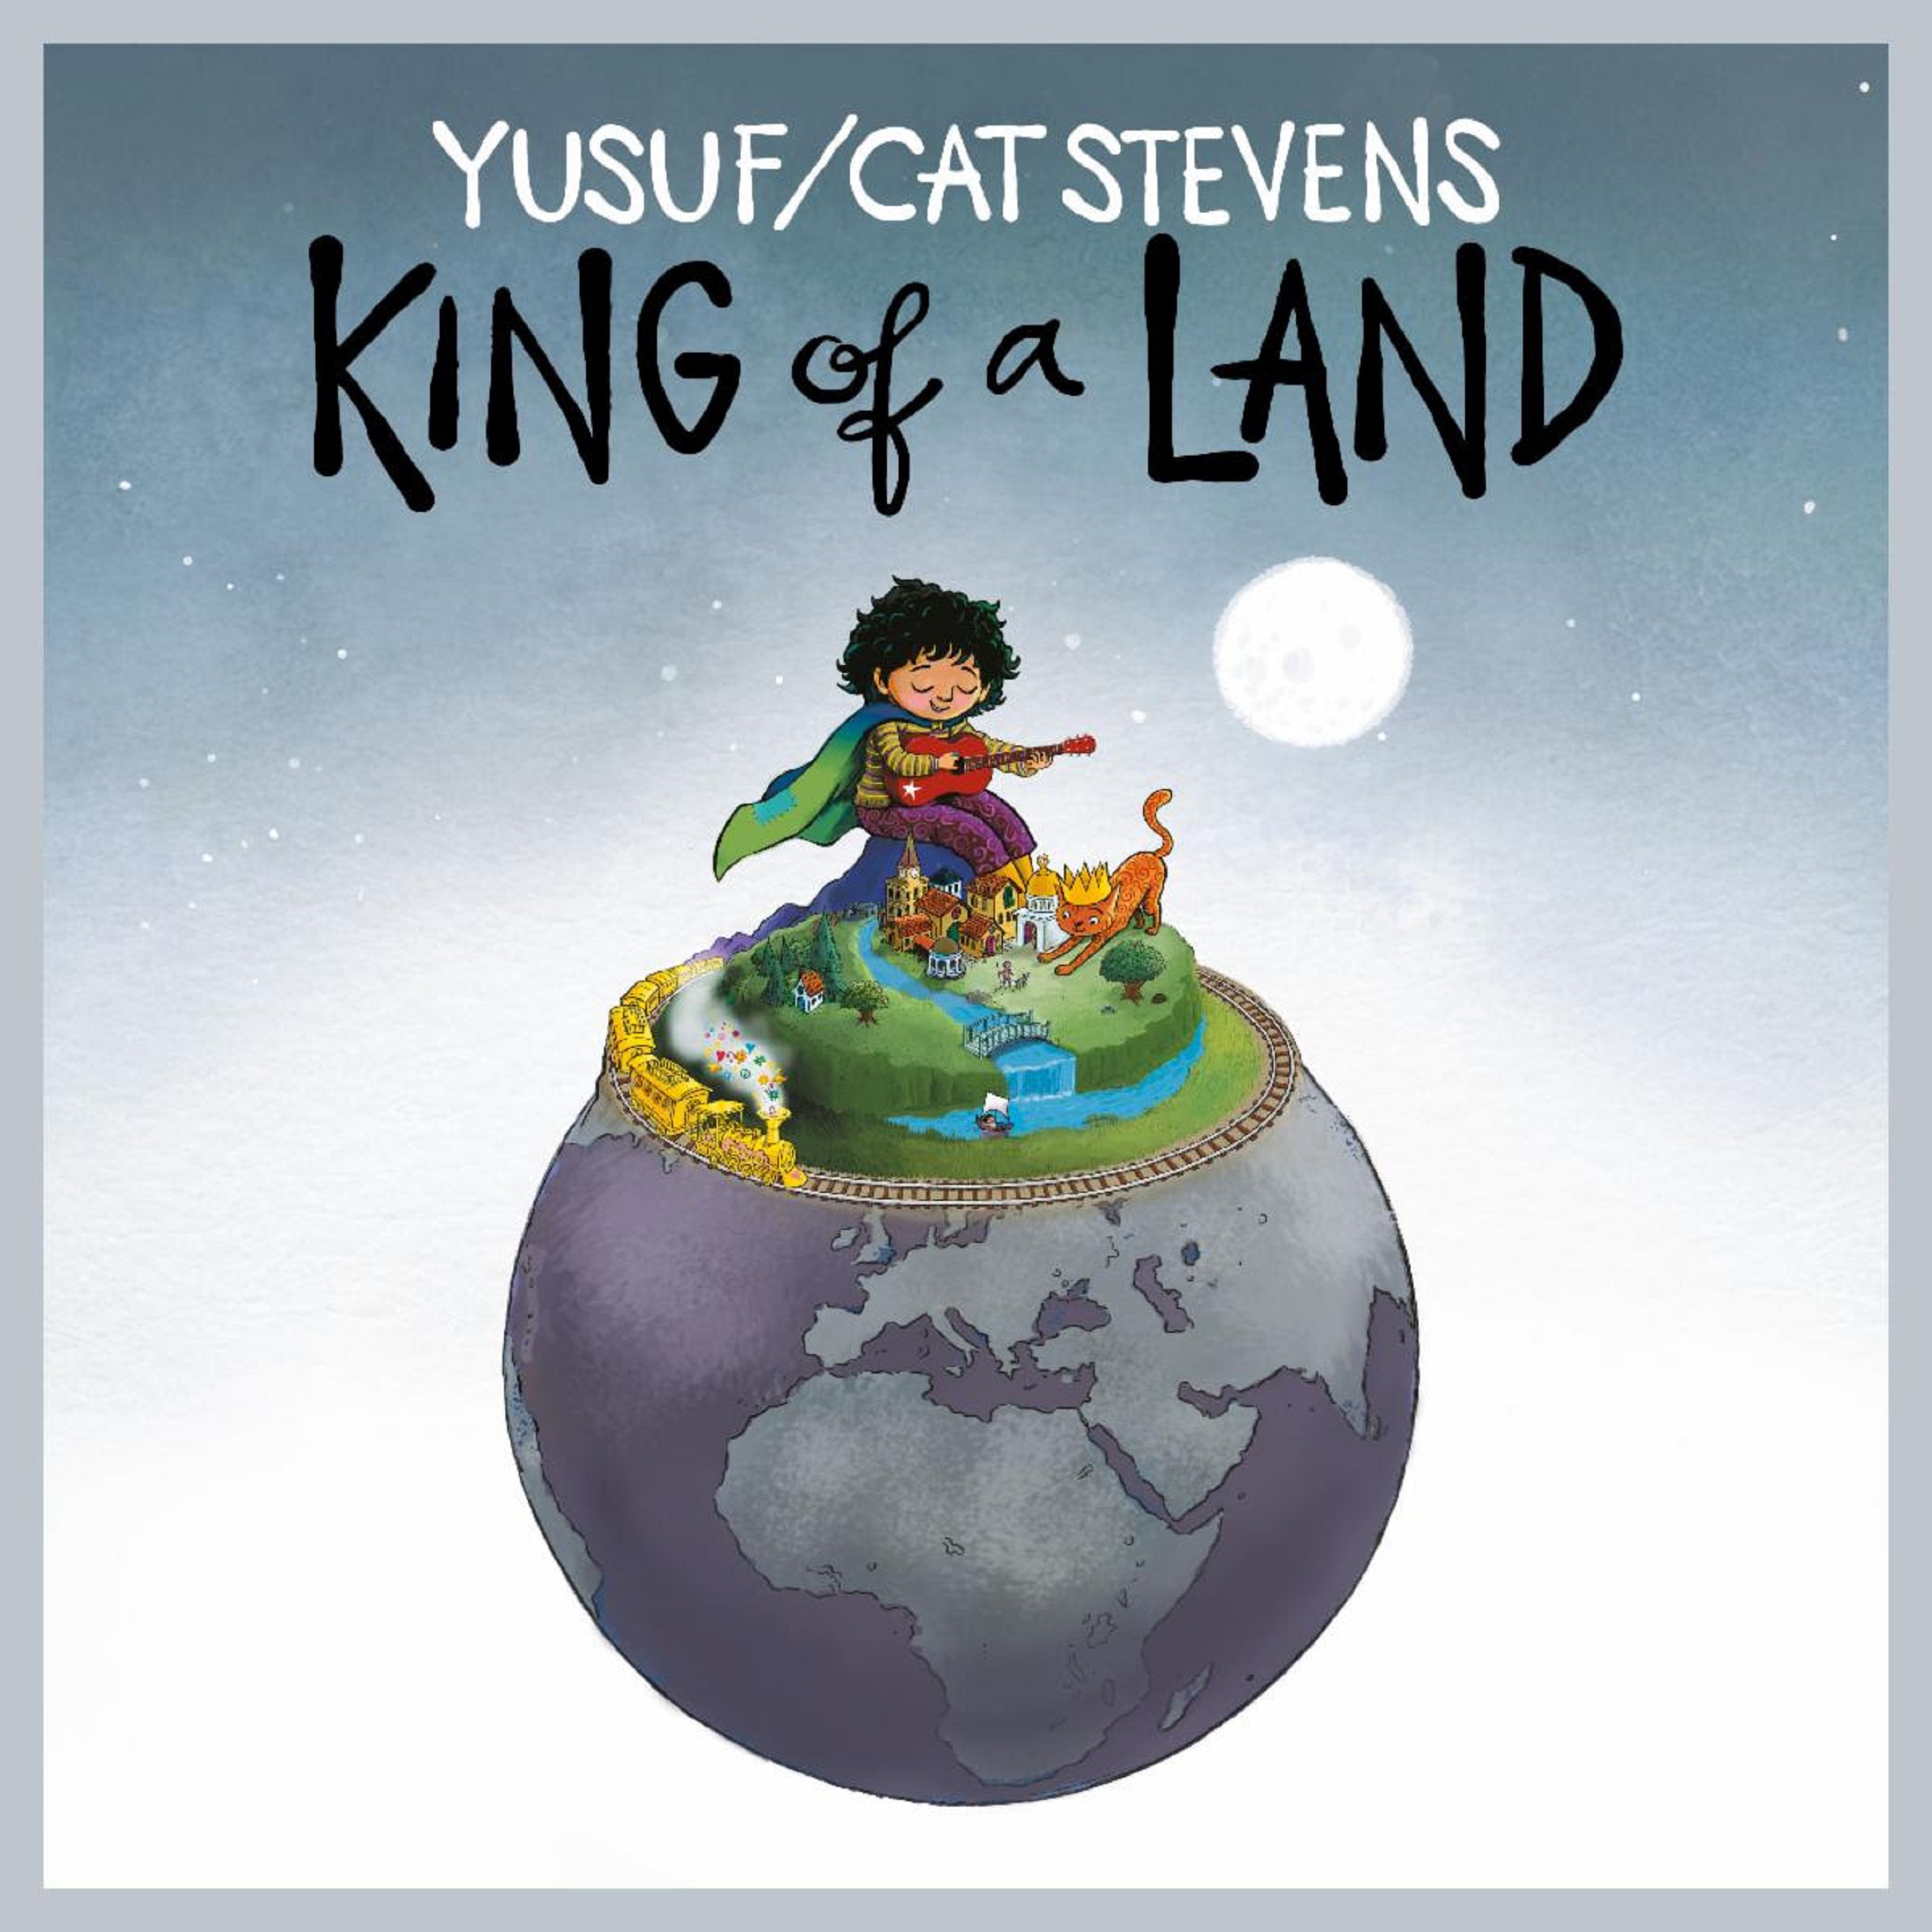 Yusuf / Cat Stevens announces 'King of a Land,' new album of originals via George Harrison's Dark Horse Records